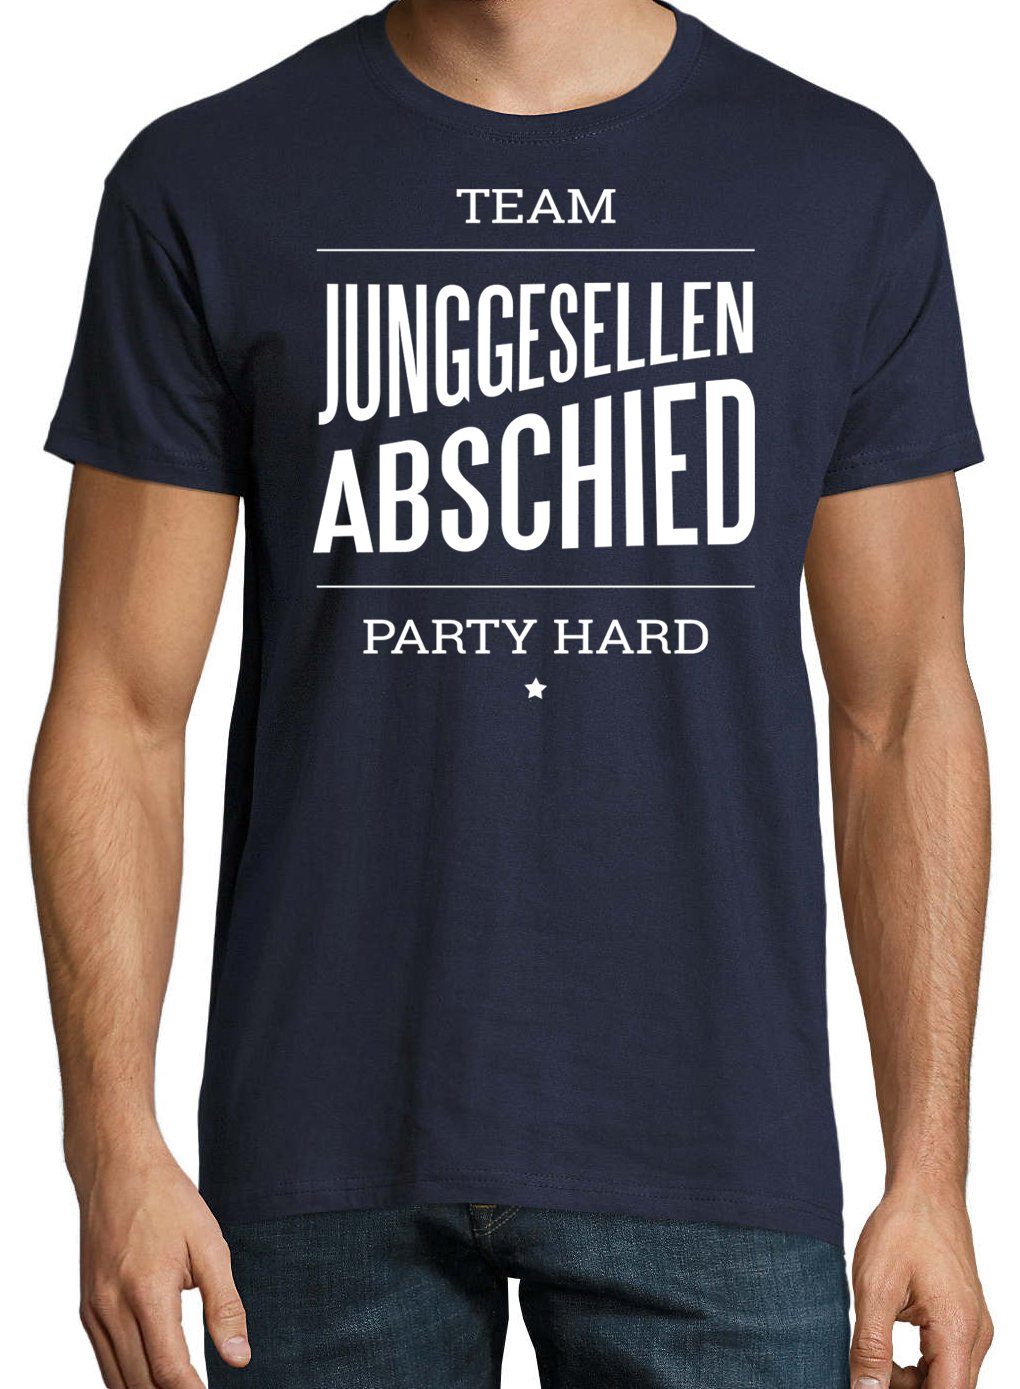 T-Shirt Shirt Herren im ABSCHIED Youth PARTY TEAM Fun-Look Designz HARD Navy JUNGGESELLEN